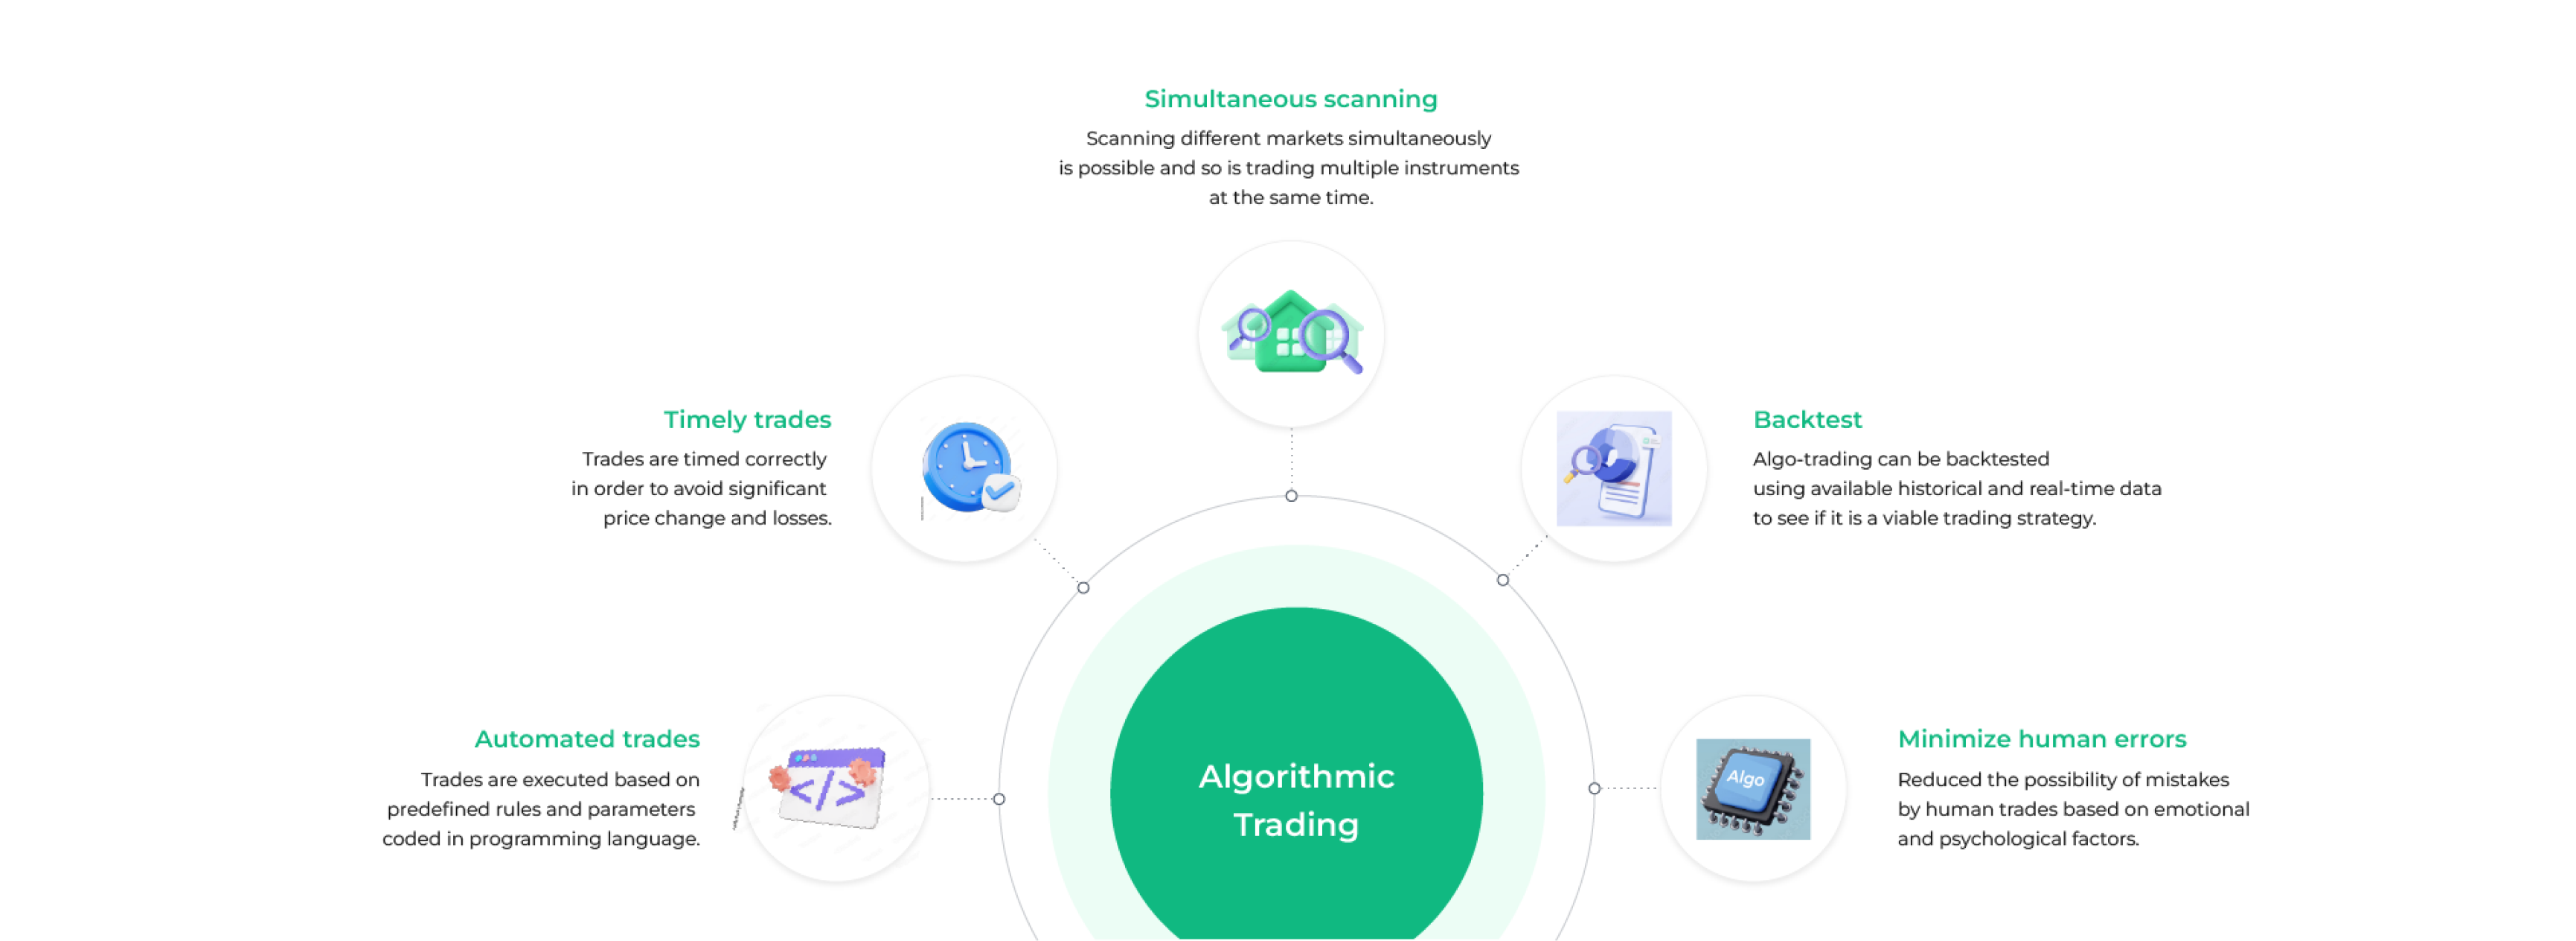 Benefits of Algorithmic Trading